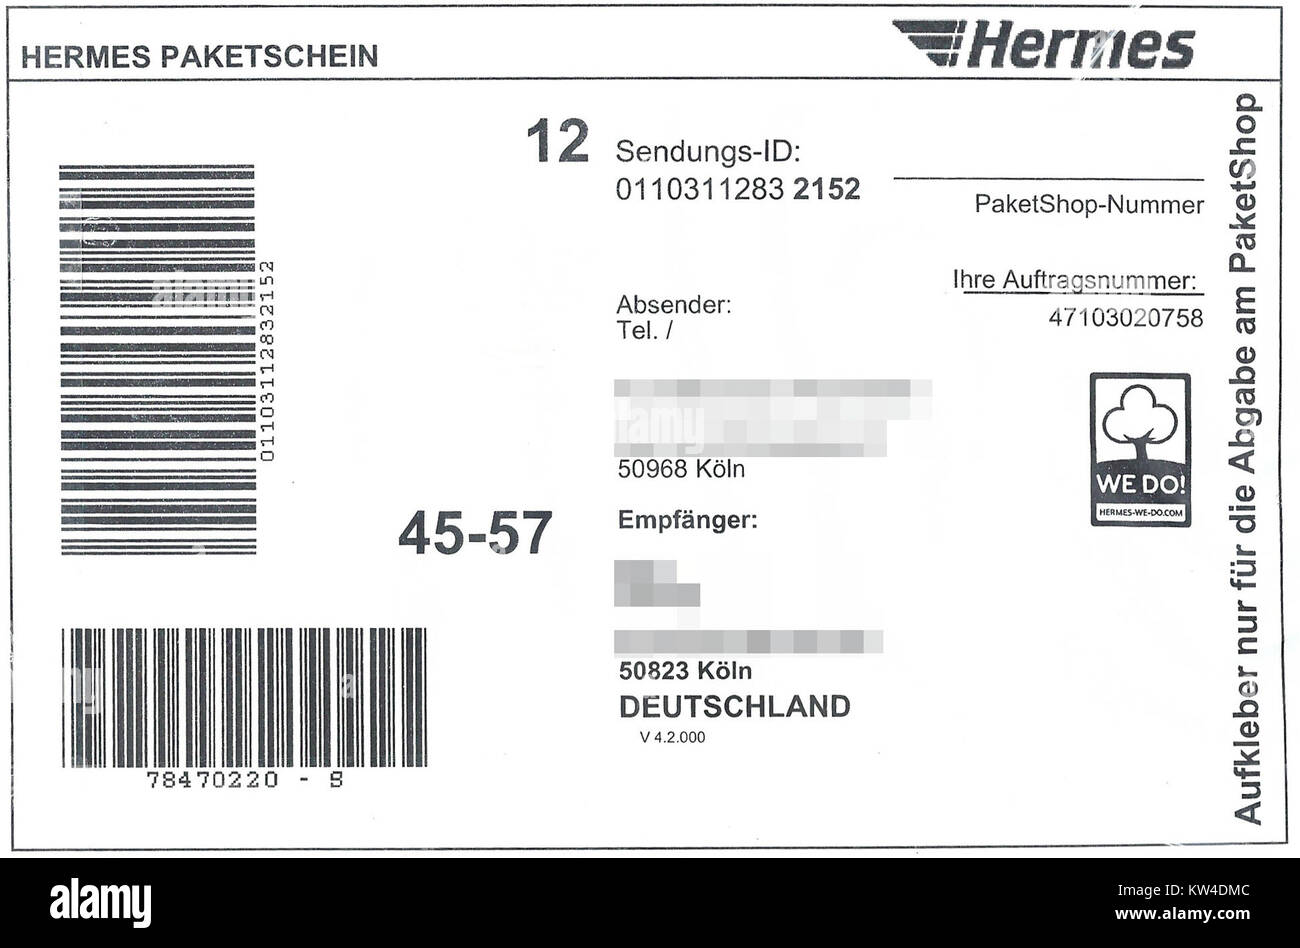 Paketaufkleber Paket über Hermes Paketshop 2017 Stockfotografie - Alamy